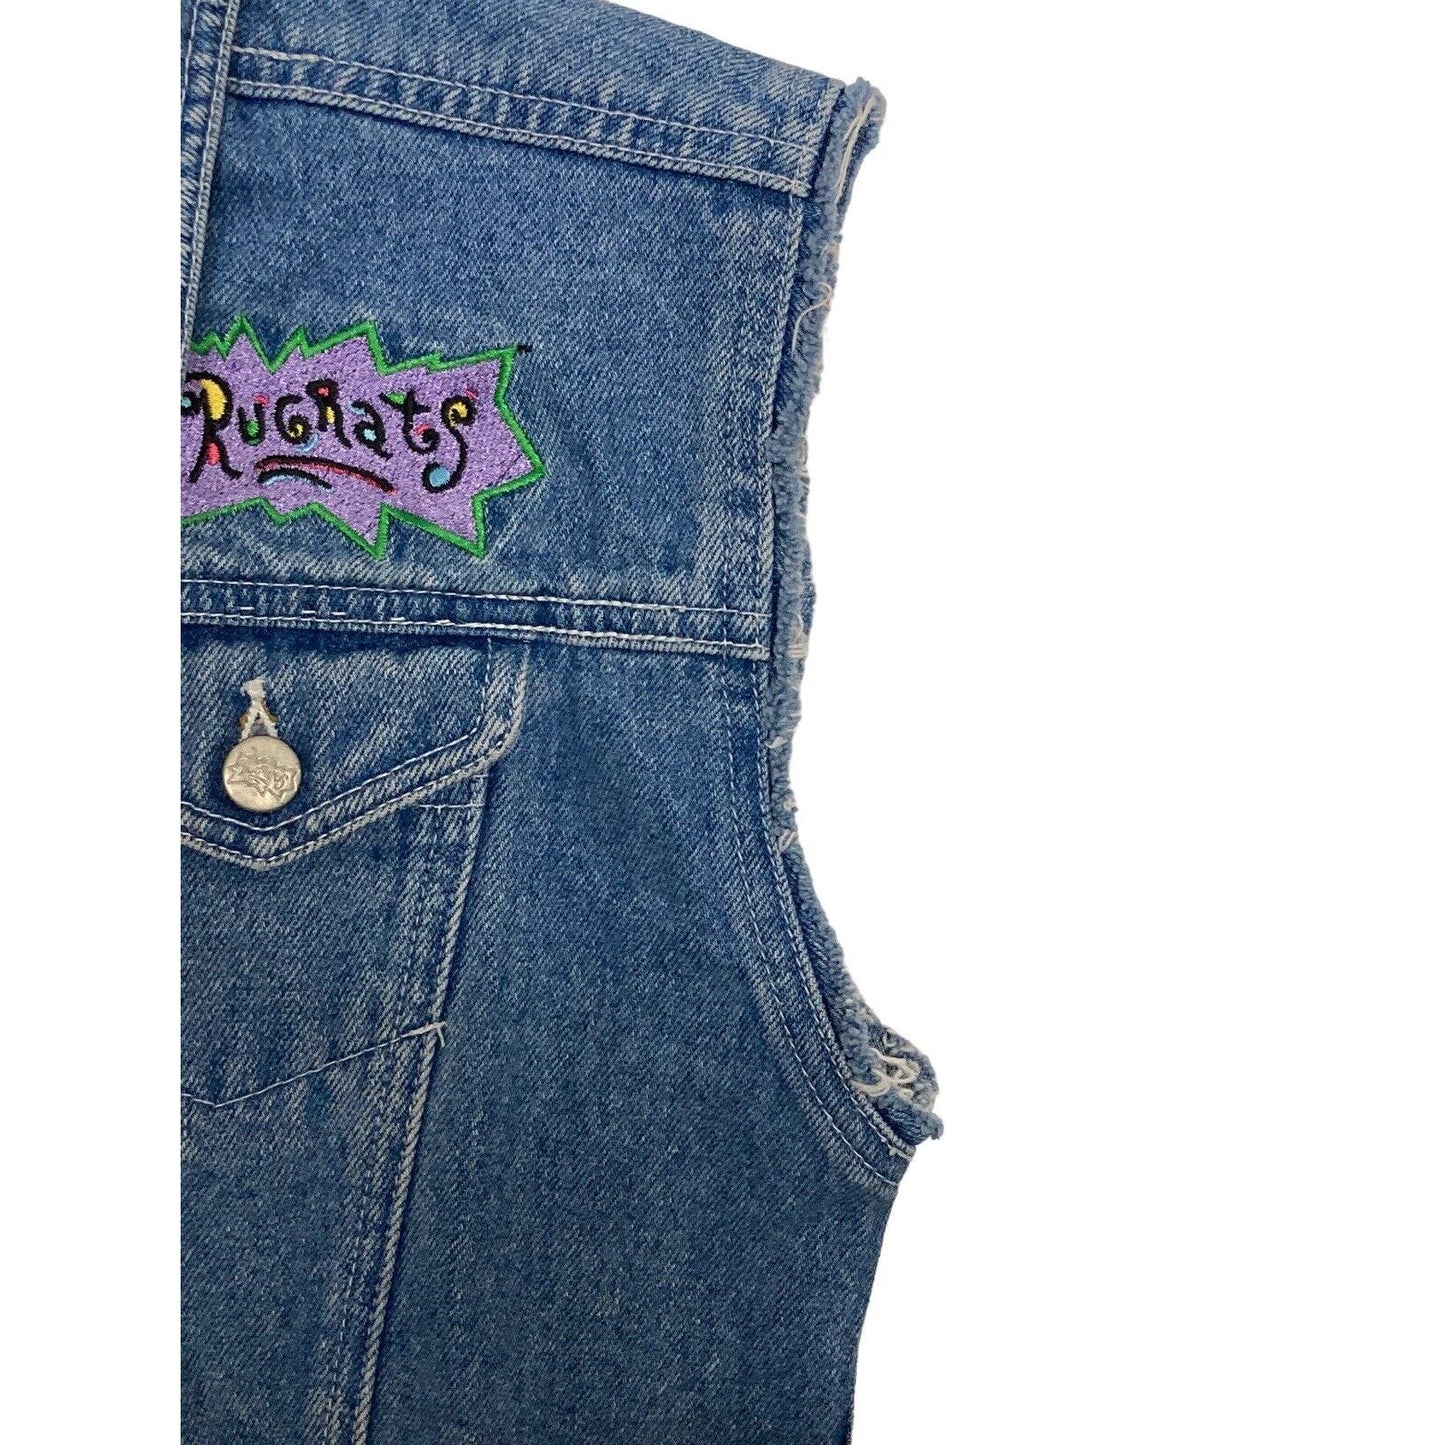 Nickelodeon Rugrats Embroidered Angelica Girls Denim Jean Vest Size 10